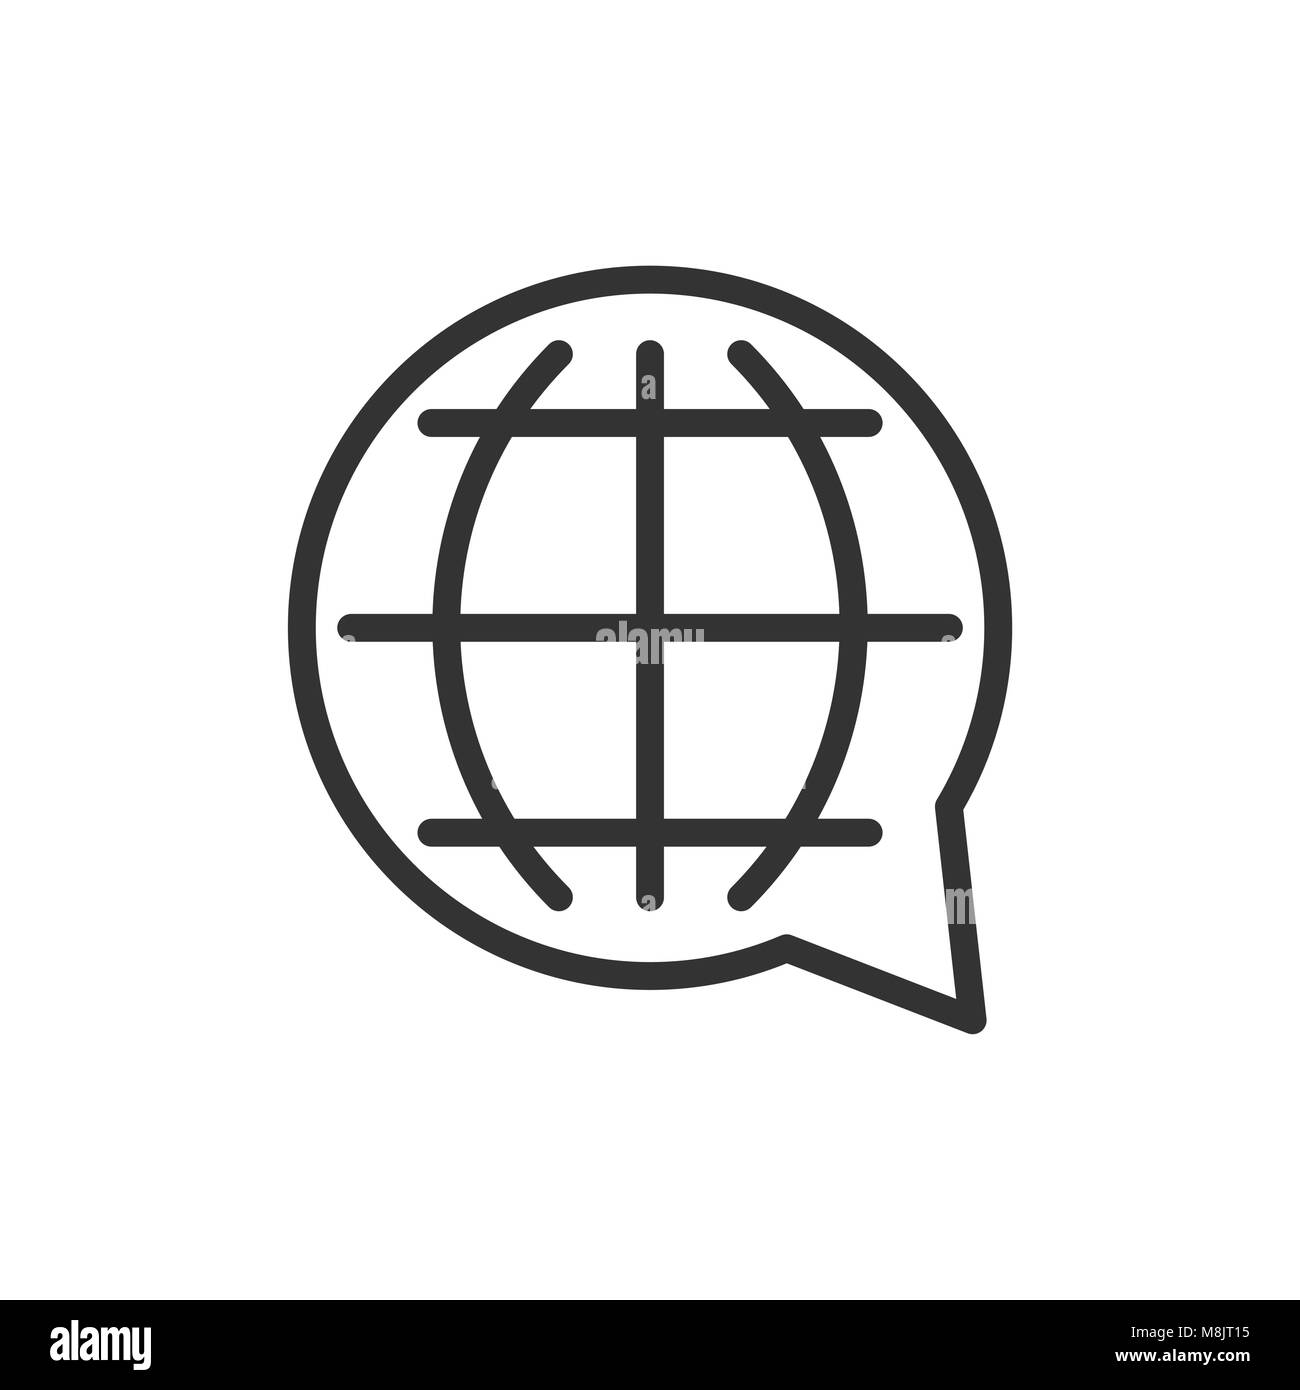 Choose or change language icon. Vector illustration. Business concept globe world communication pictogram. Stock Vector